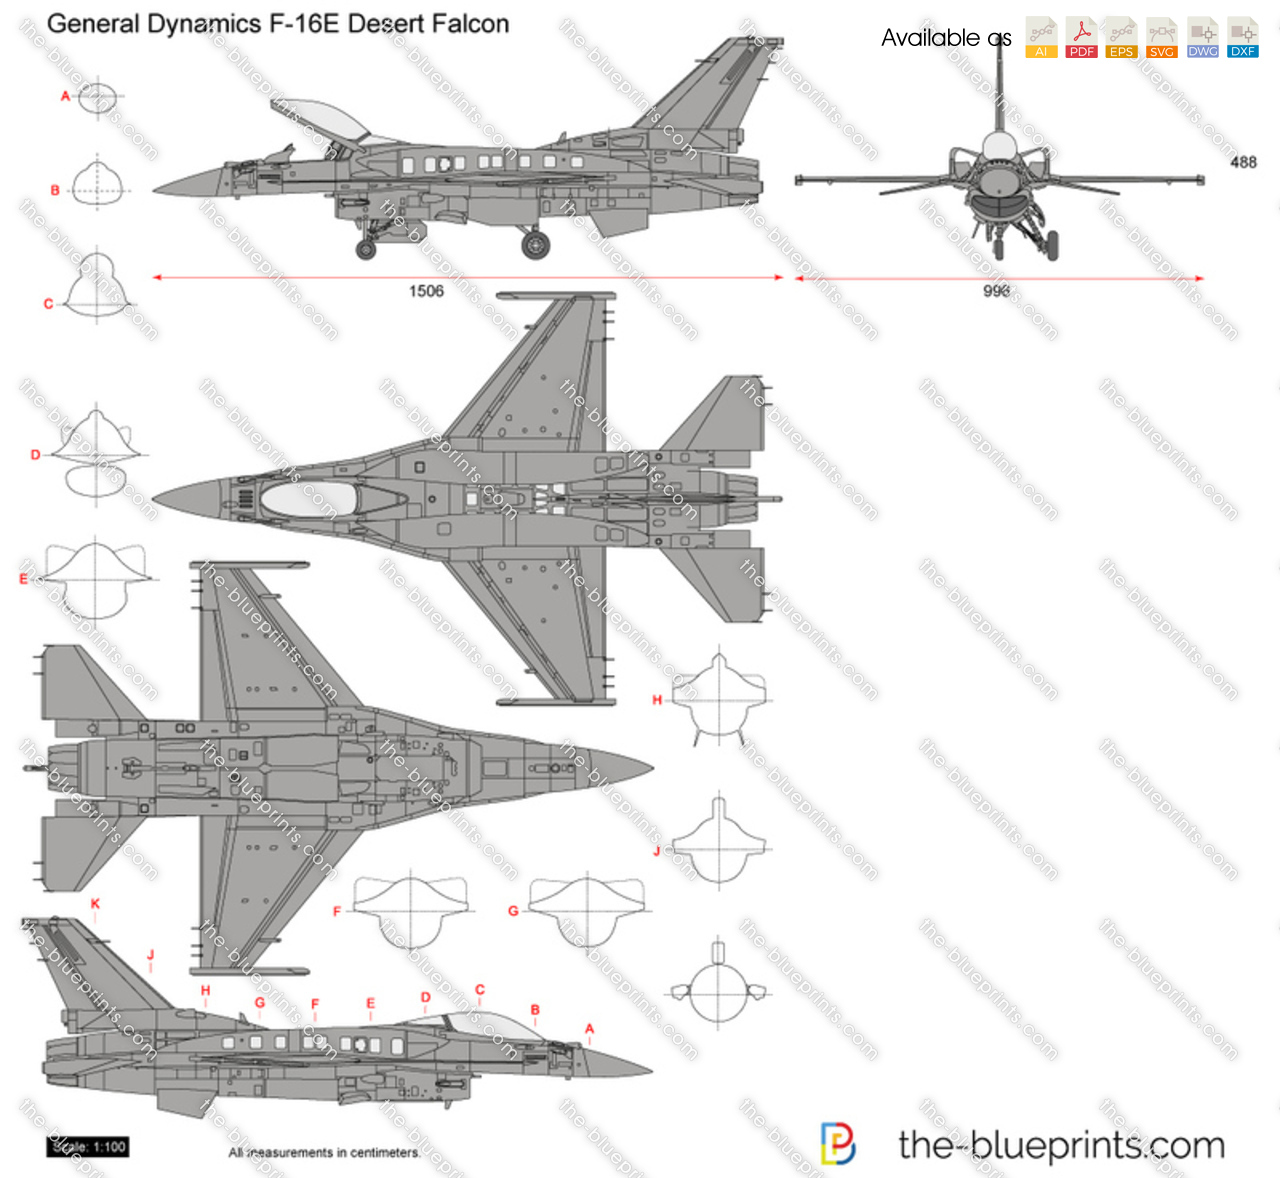 General Dynamics F-16E Desert Falcon